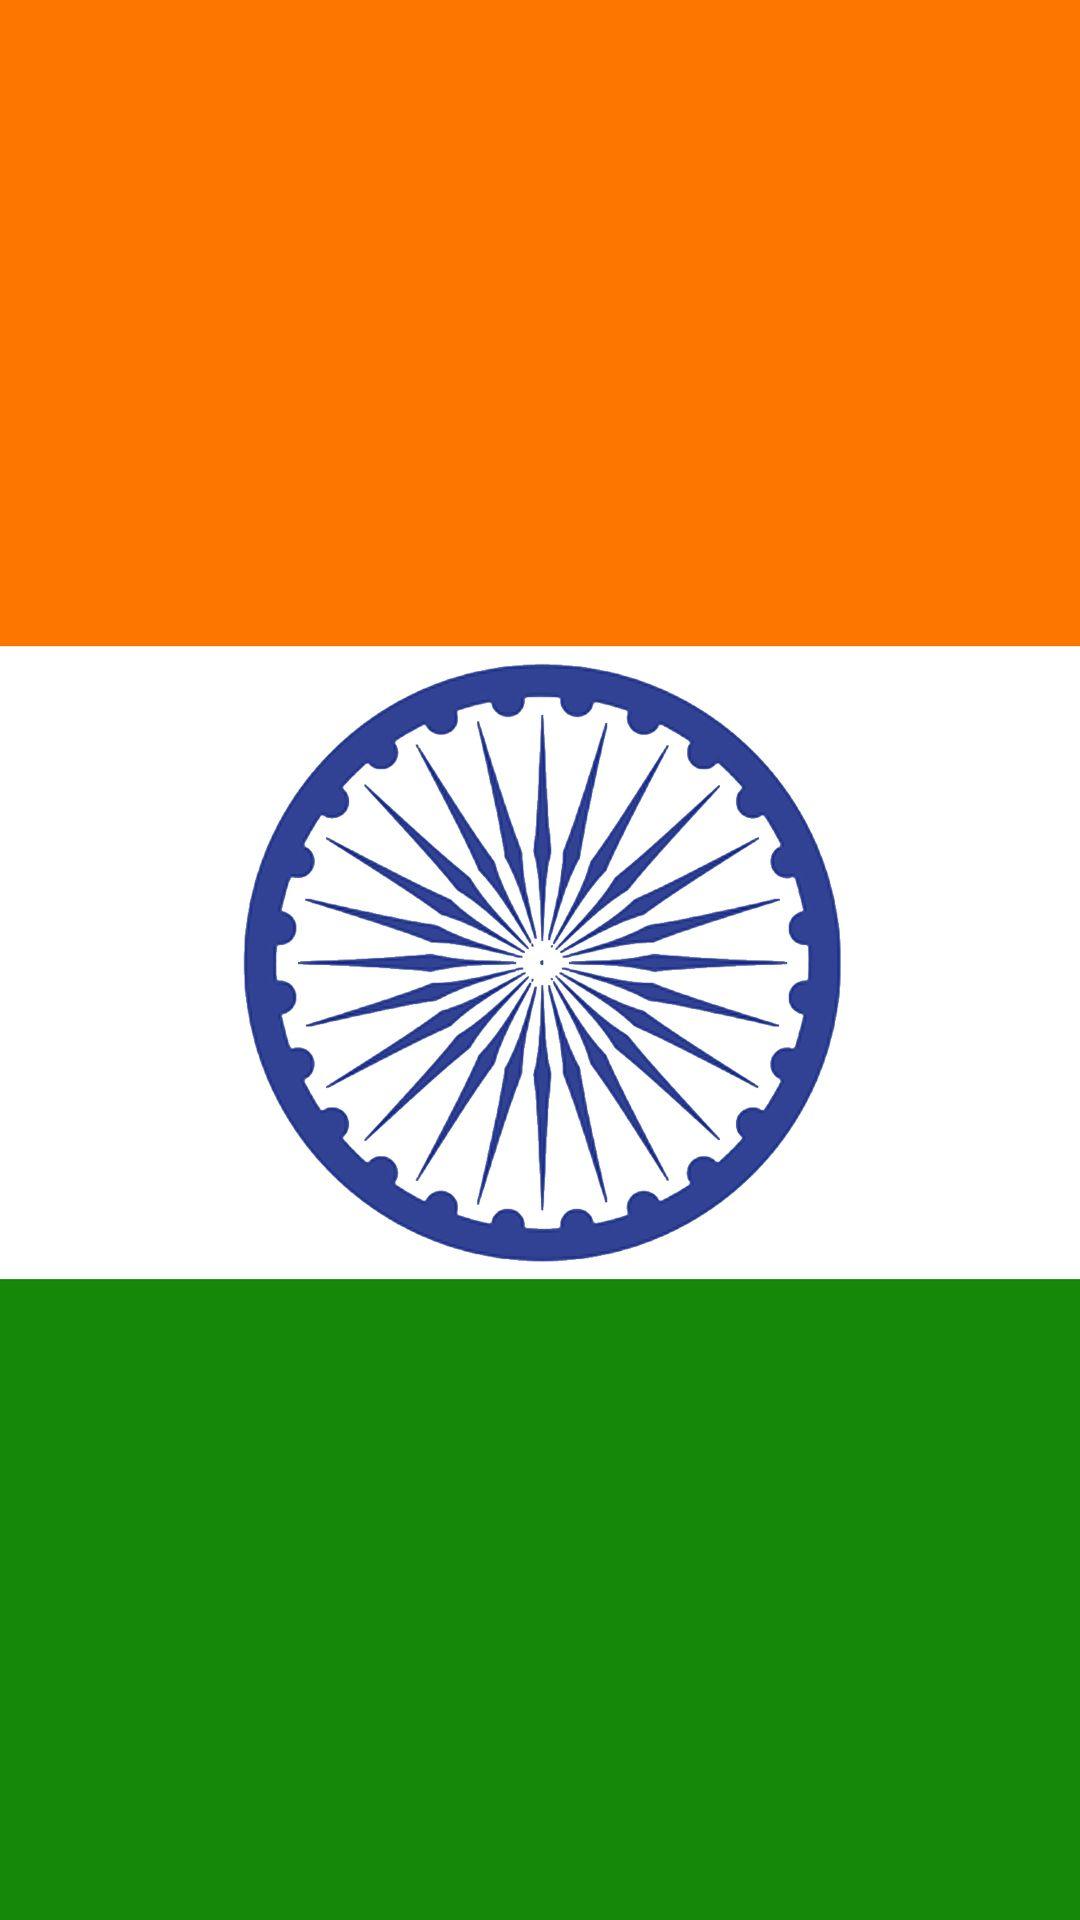 Indian Flag PNG  Download Transparent Indian Flag PNG Images for Free   NicePNG